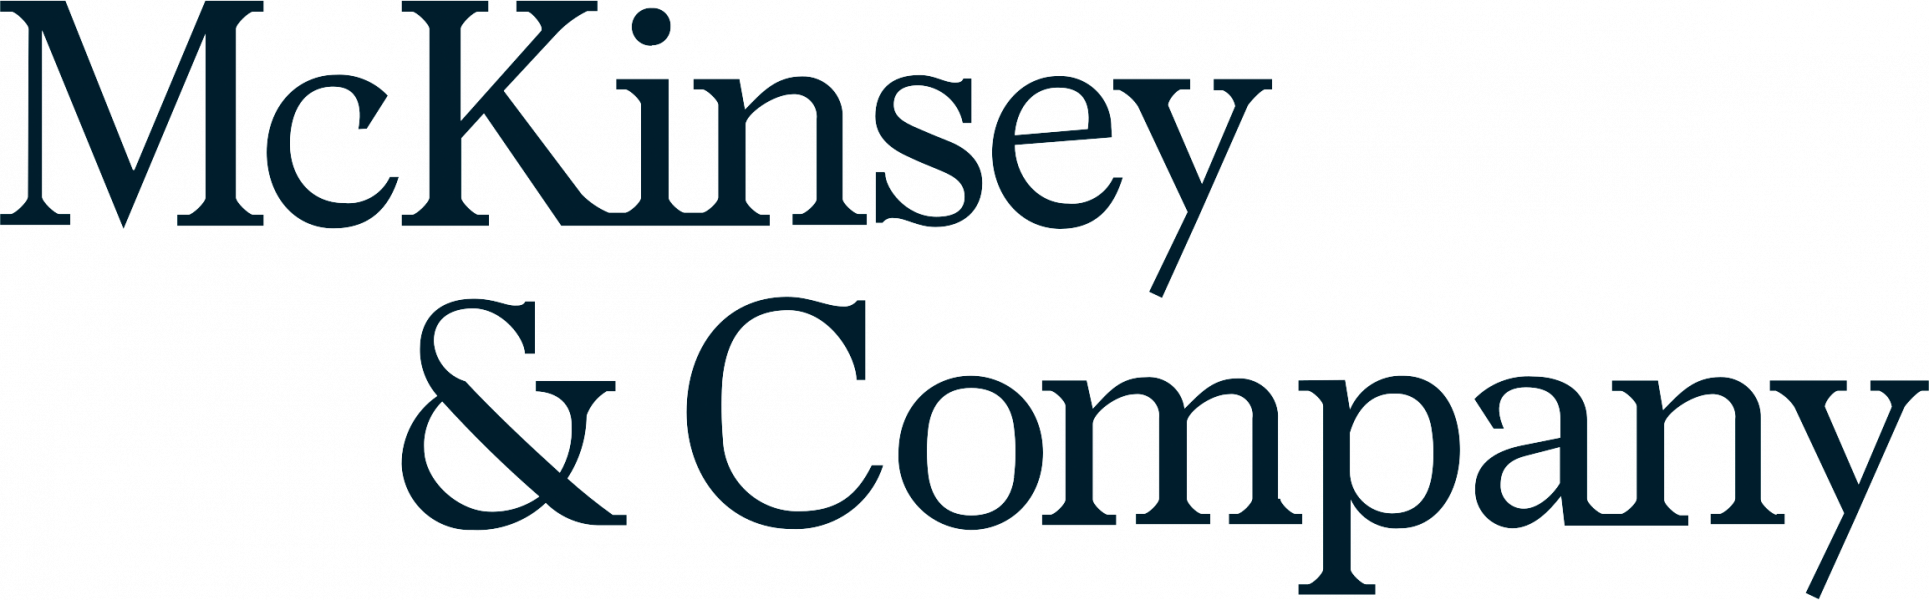 McKinsey & Company, Inc.